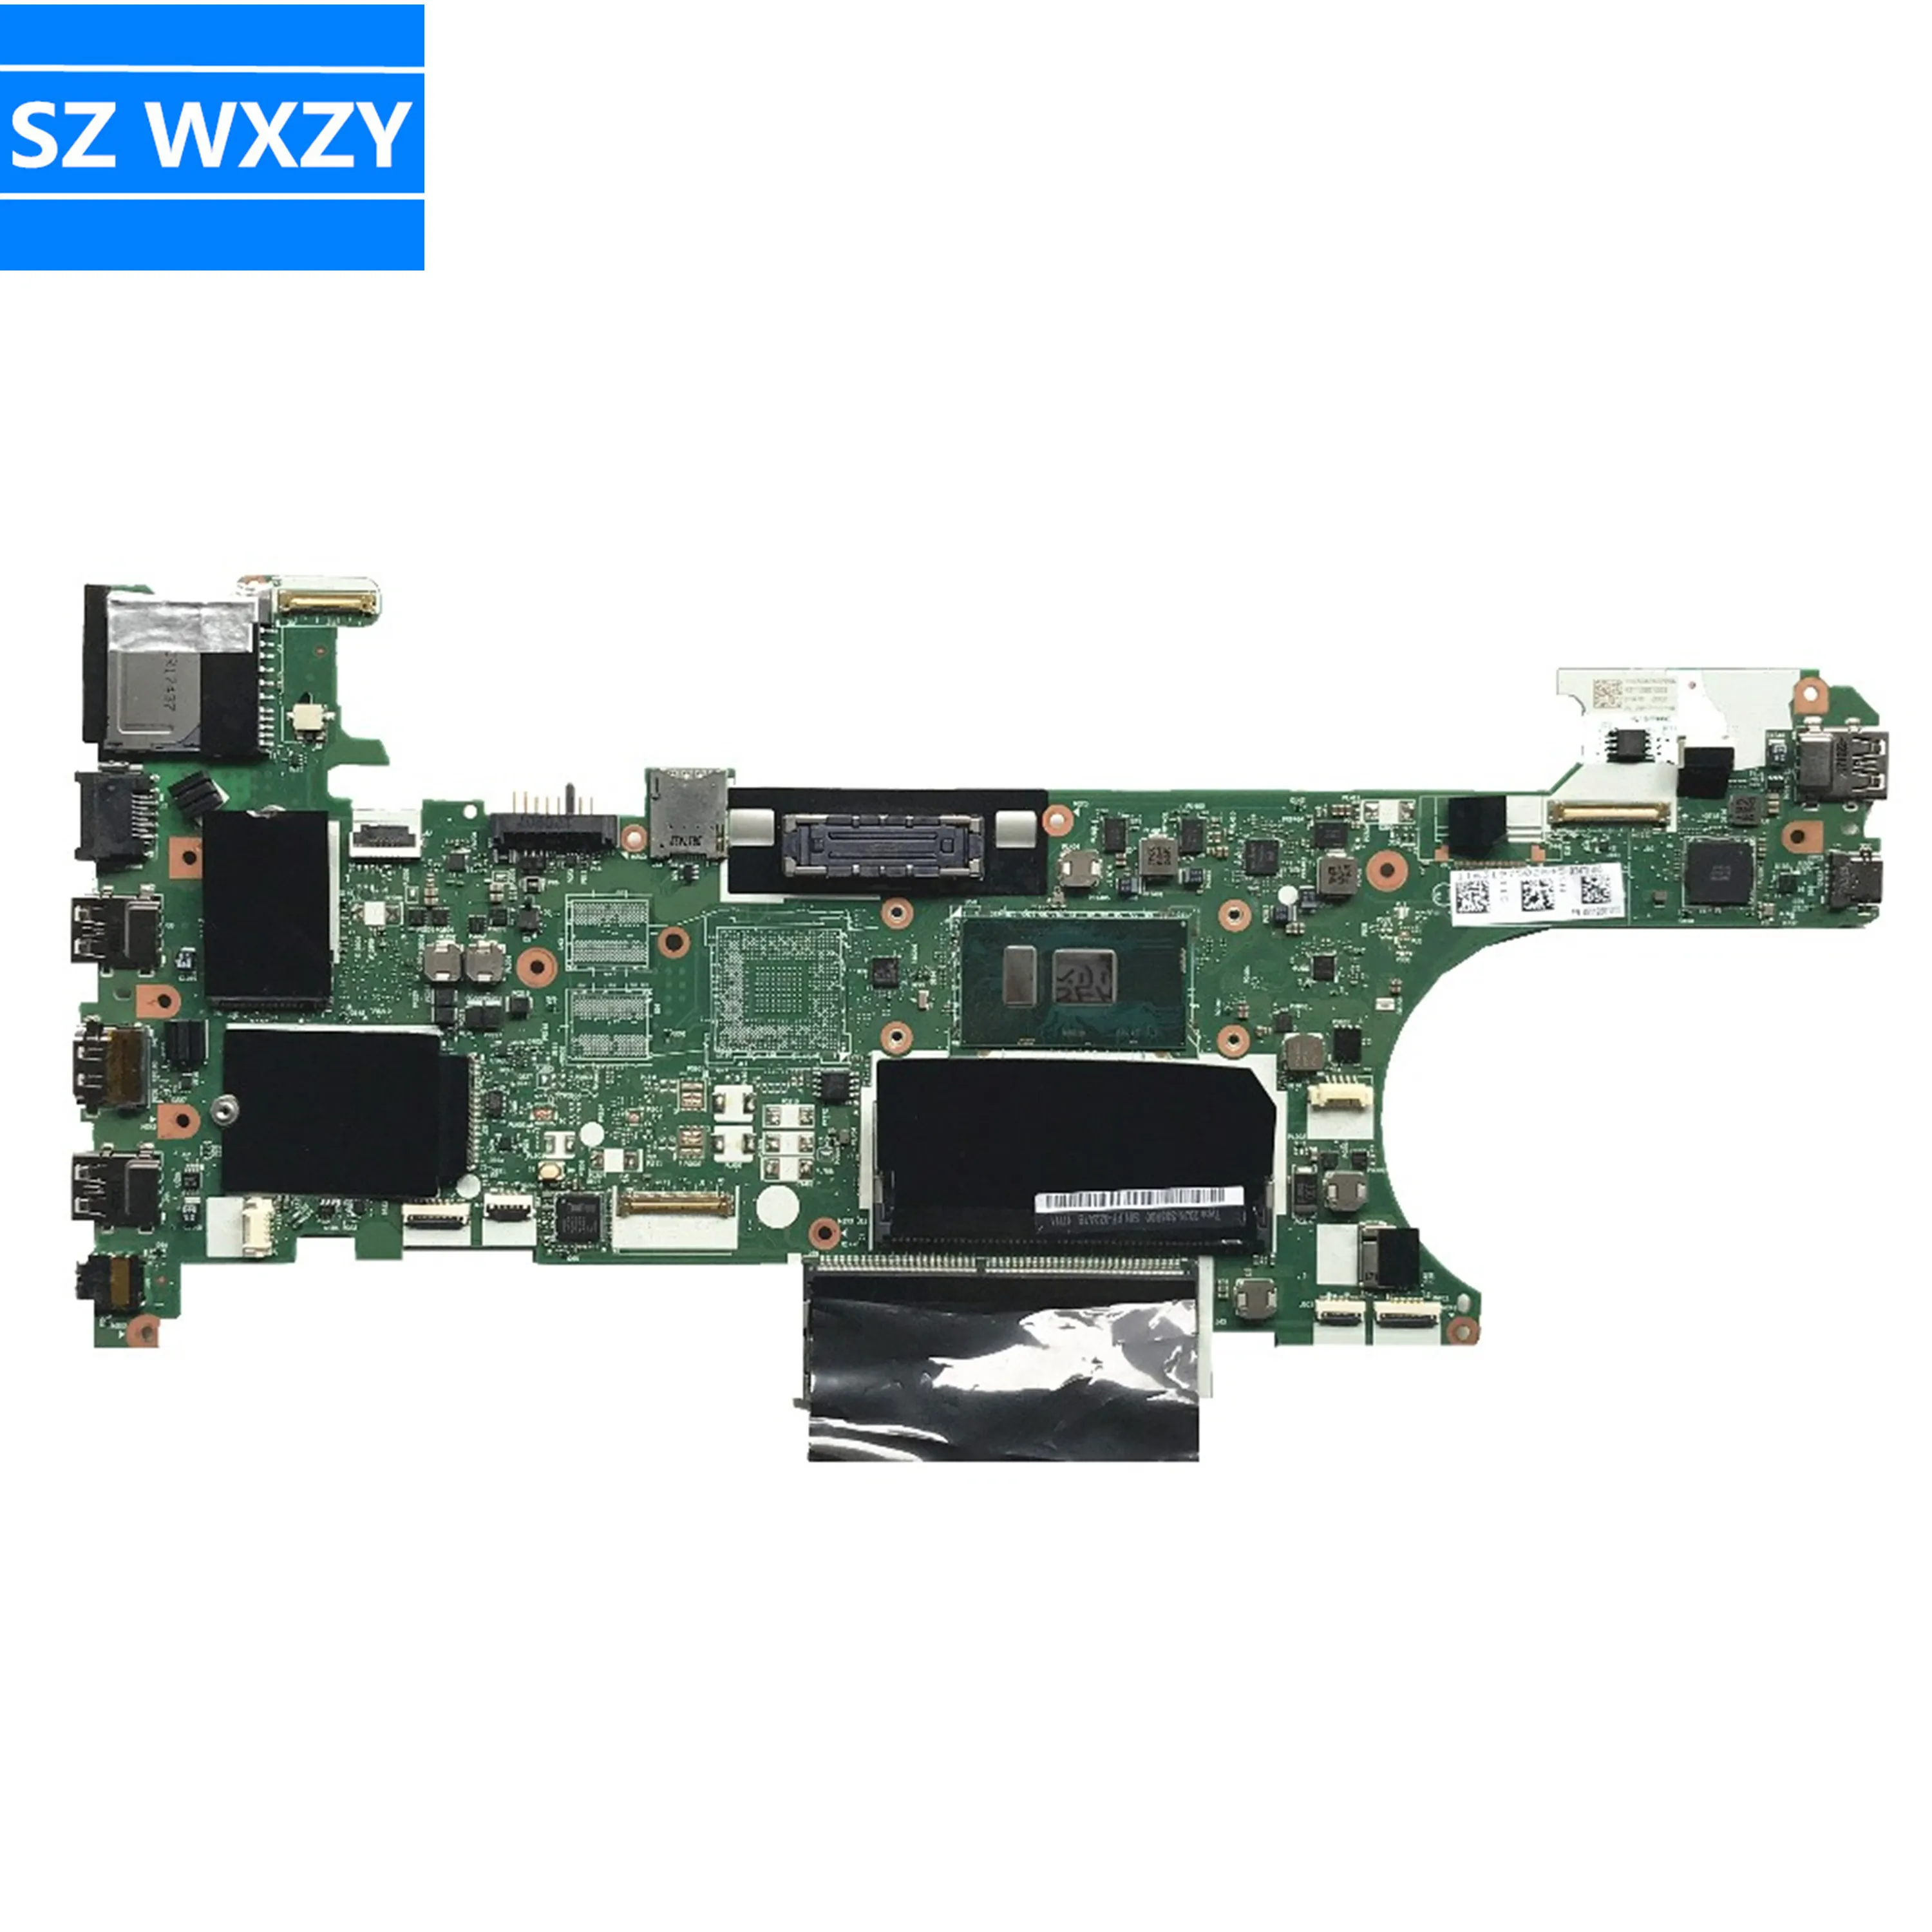 Memory Ram Compatible with Lenovo Thinkpad P51s P52s CMS 4GB T470p T470 C105 1X4GB